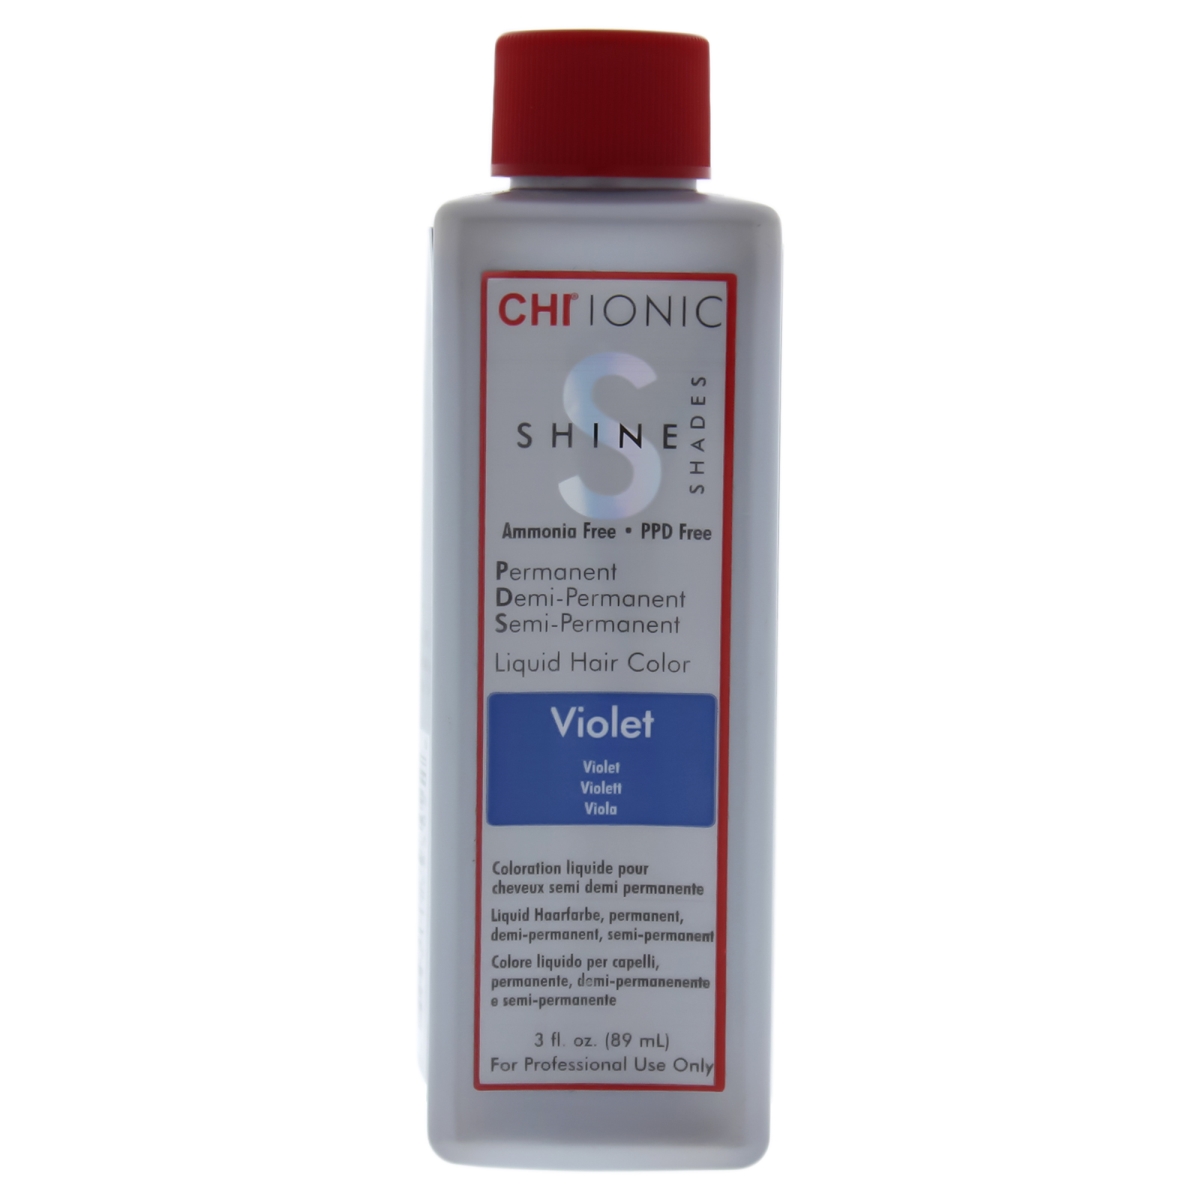 I0084064 Ionic Shine Shades Liquid Hair Color For Unisex - Violet - 3 Oz